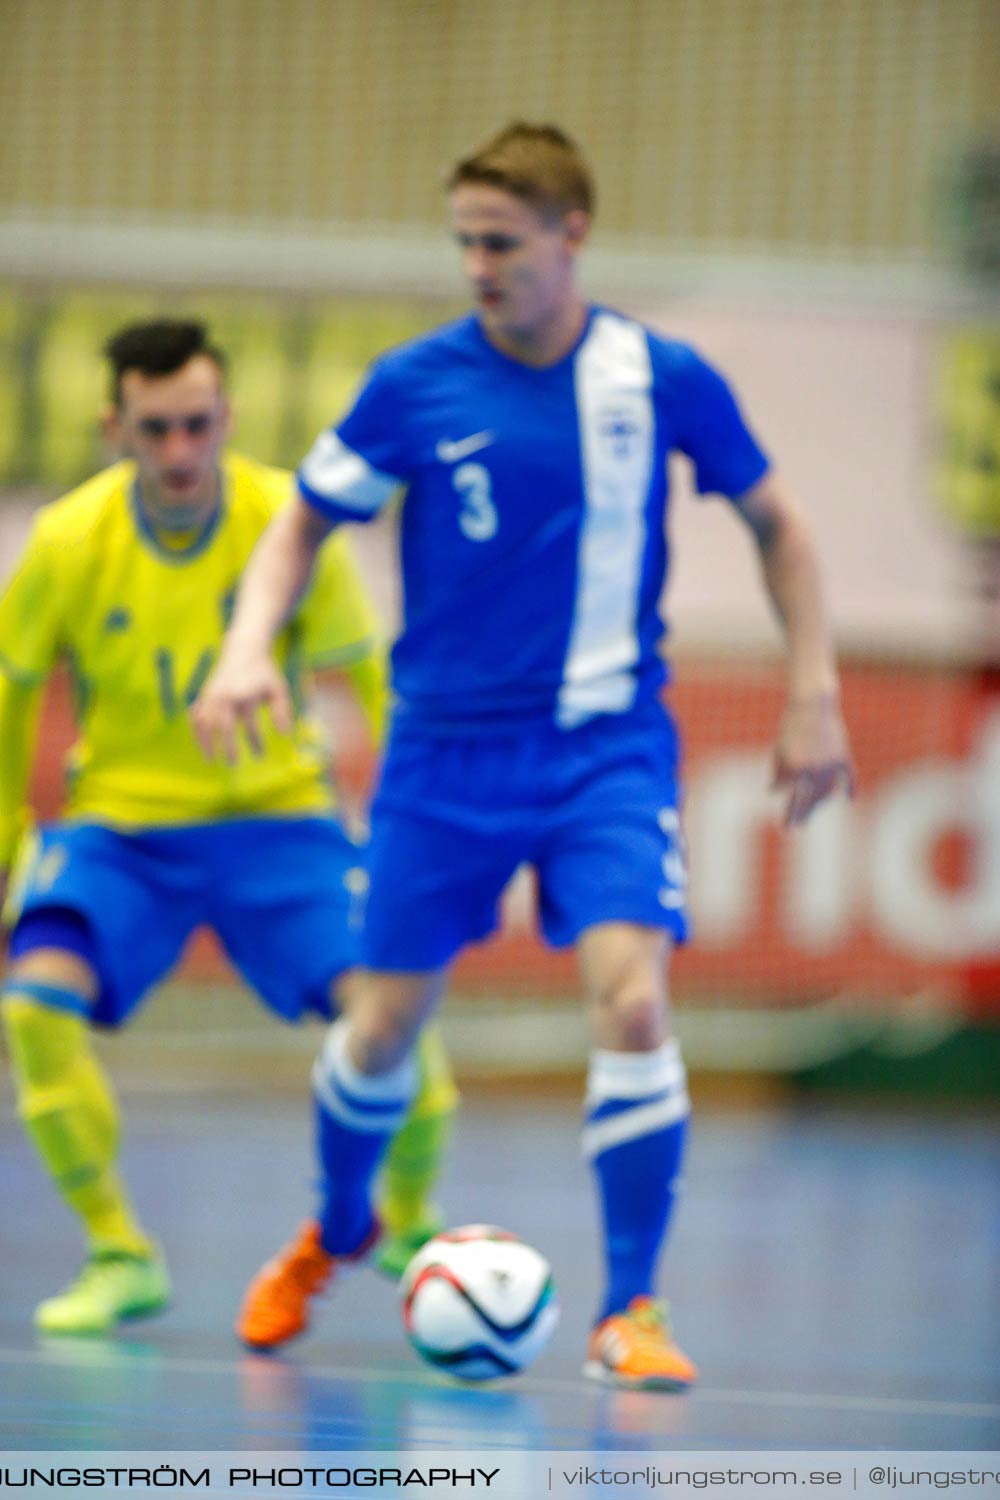 Landskamp Sverige-Finland 3-6,herr,Arena Skövde,Skövde,Sverige,Futsal,,2016,176988